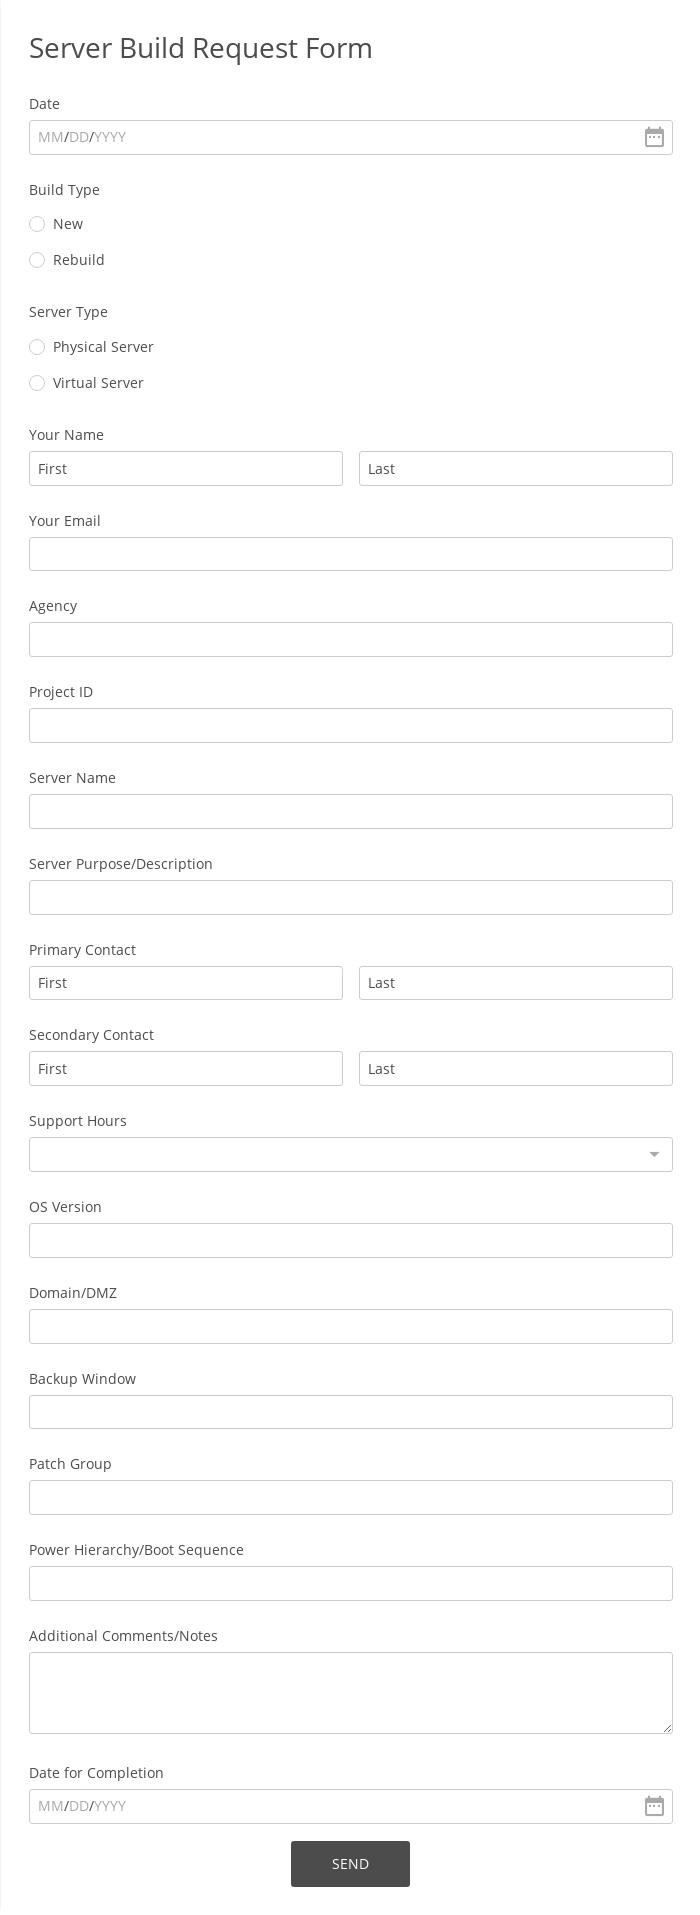 Server Build Request Form